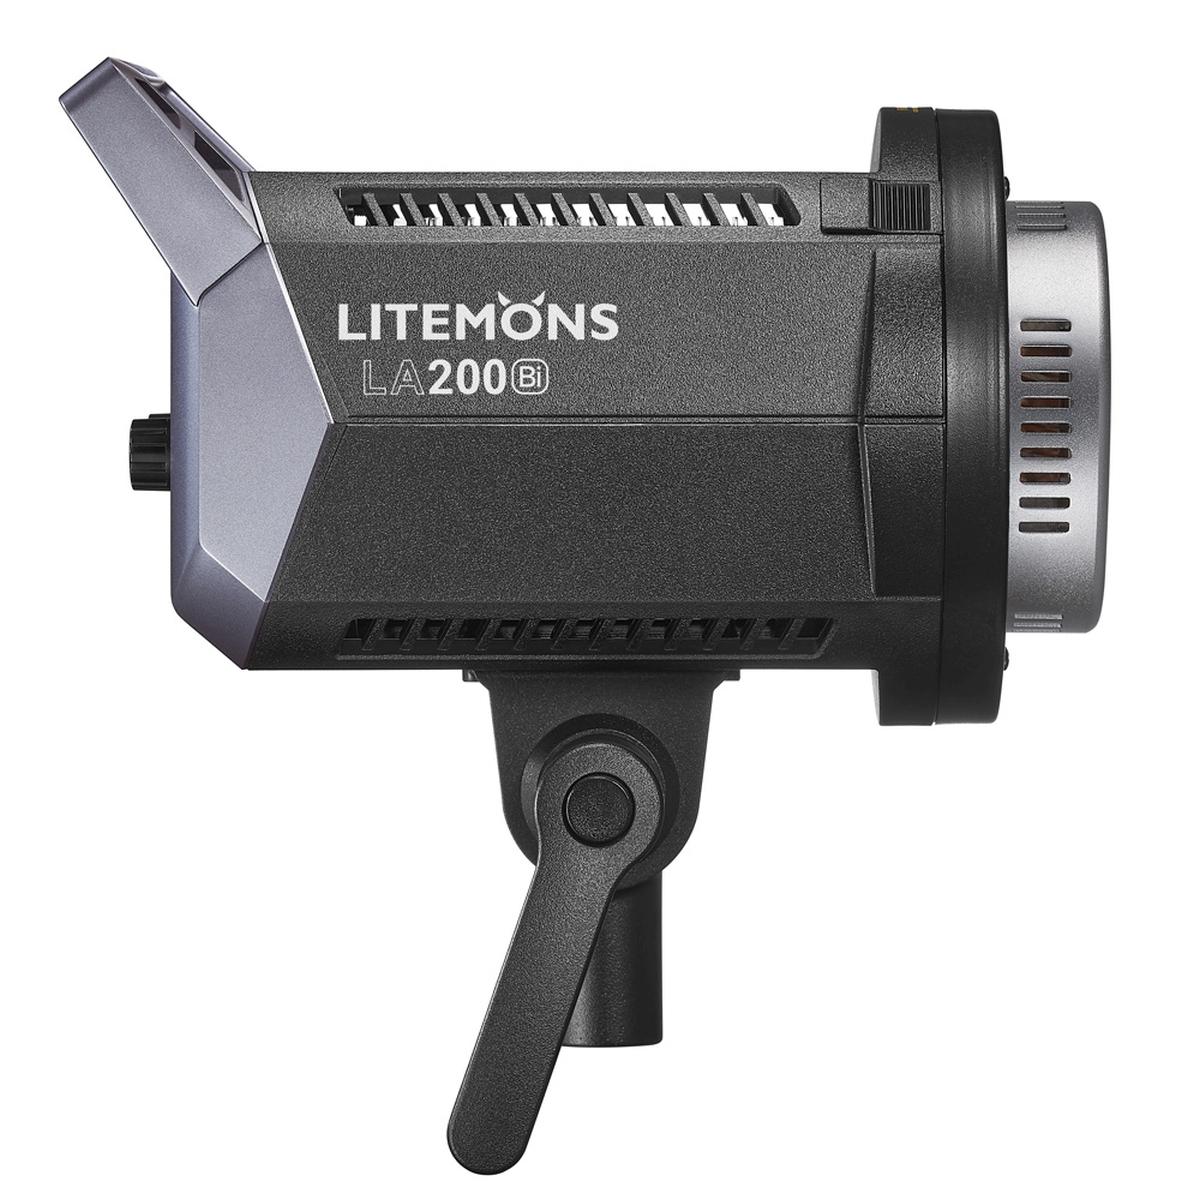 Godox Litemons LA 200 Bi LED Video Light